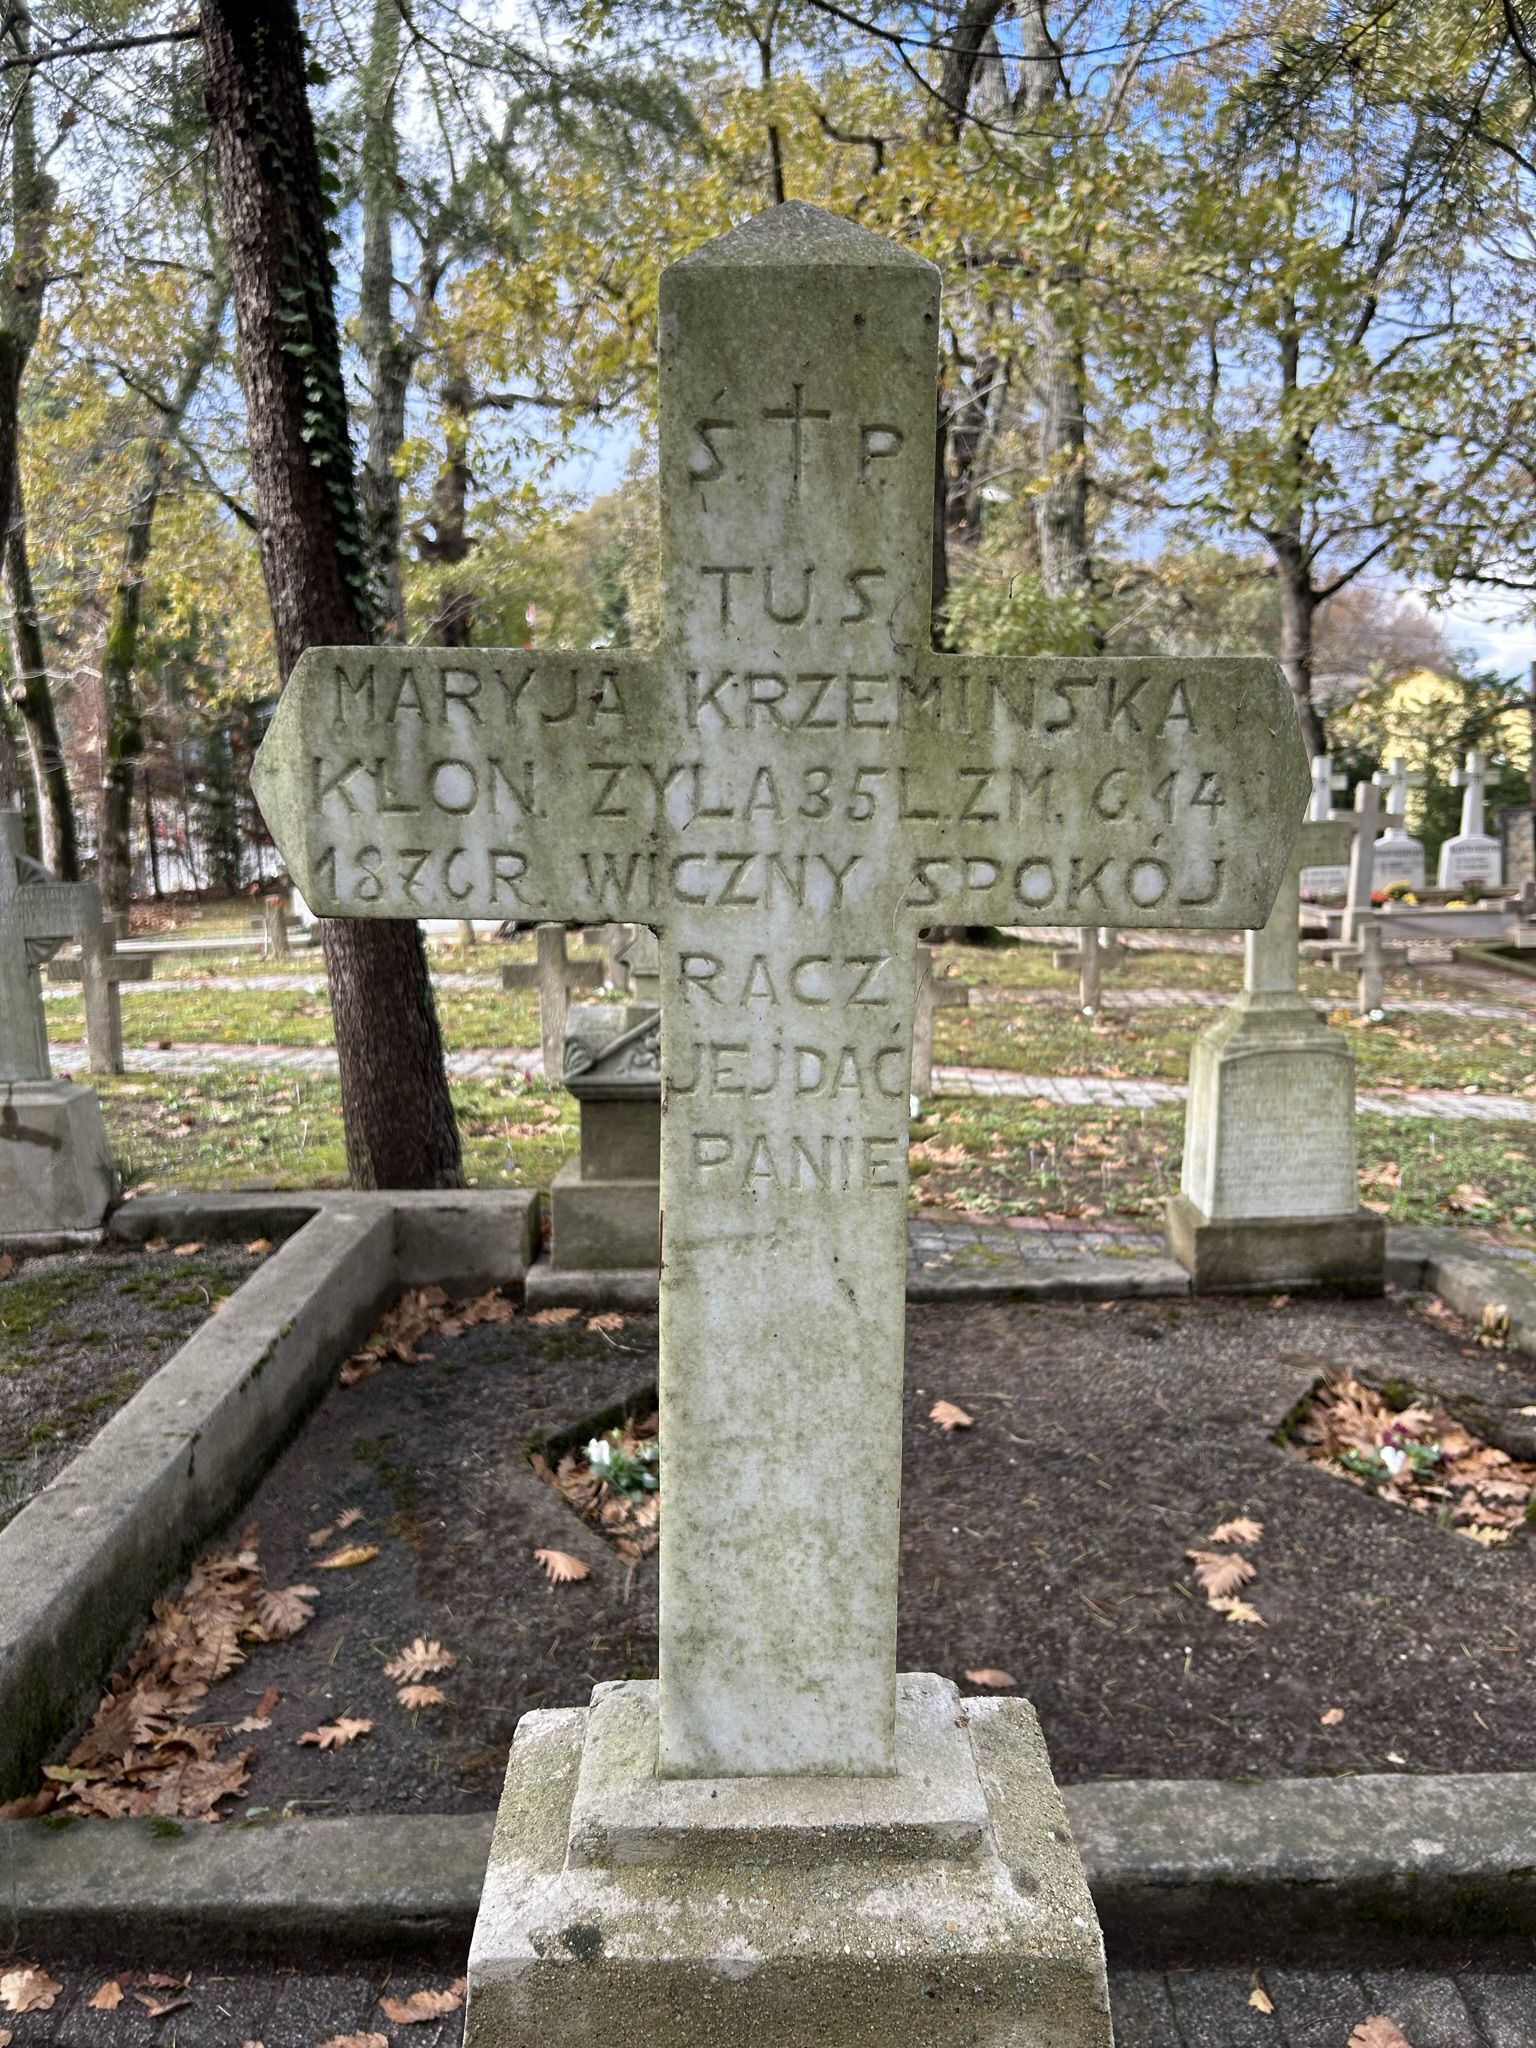 Inscription from the gravestone of Mary Krzeminski, Catholic cemetery in Adampol